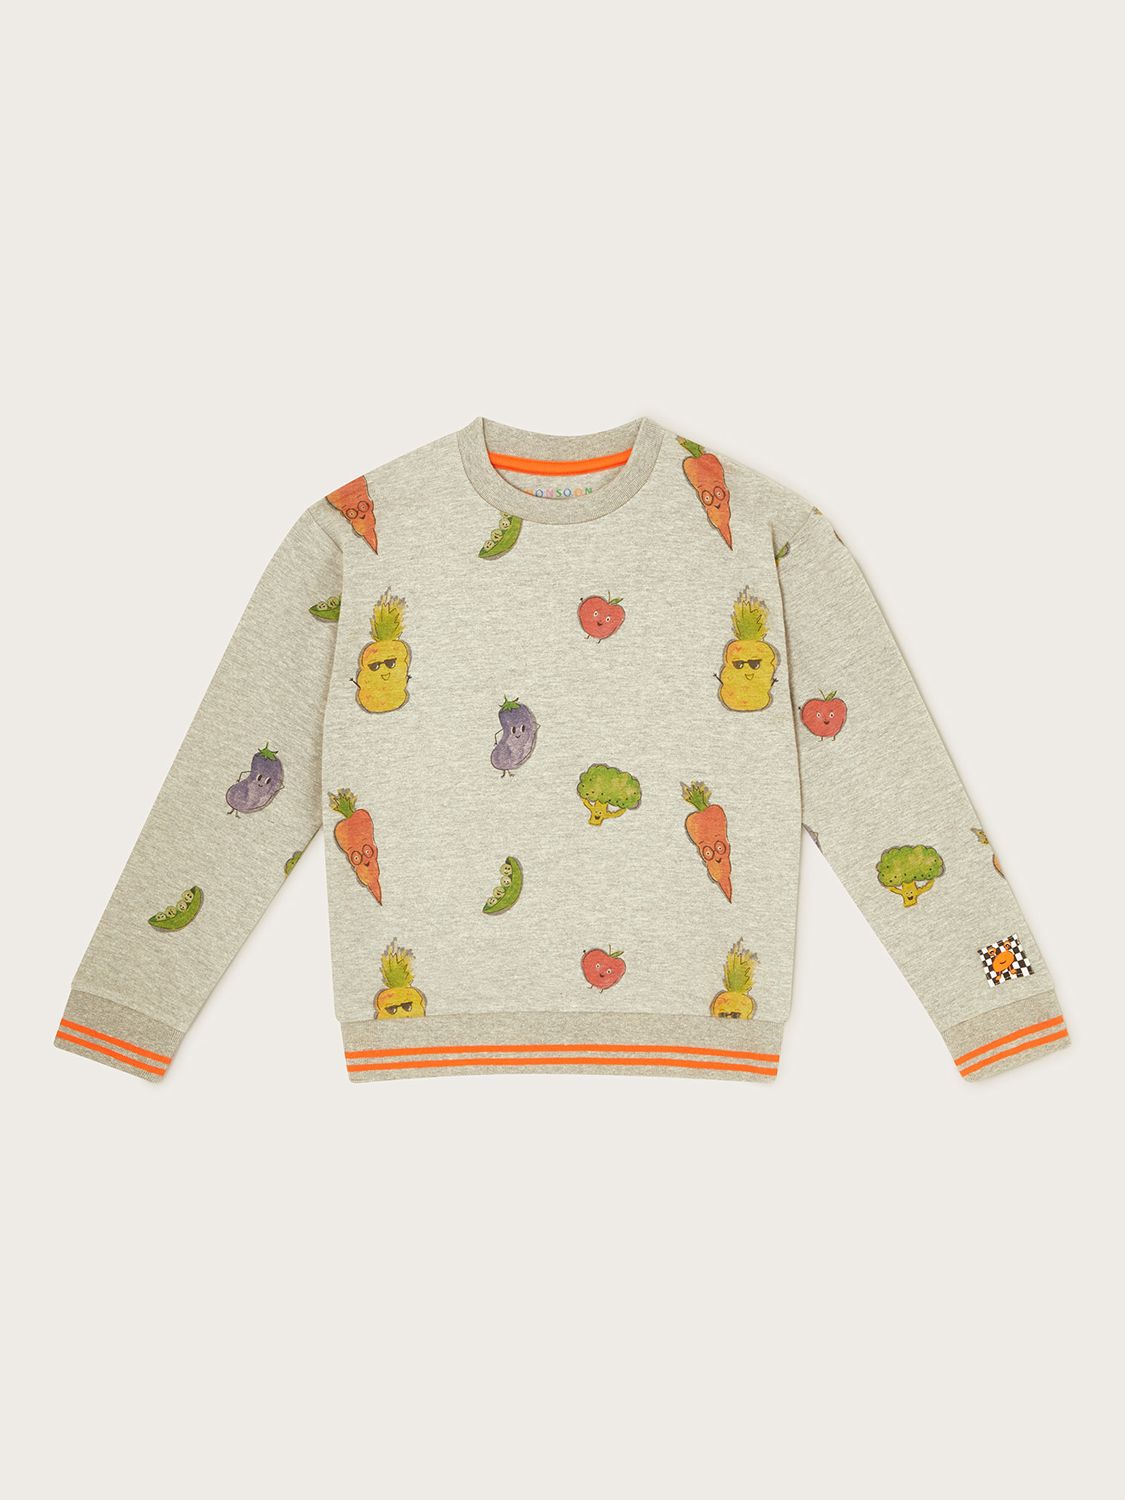 Monsoon Kids' Fruit & Veg Print Sweatshirt, Grey/Multi, 3-4 years